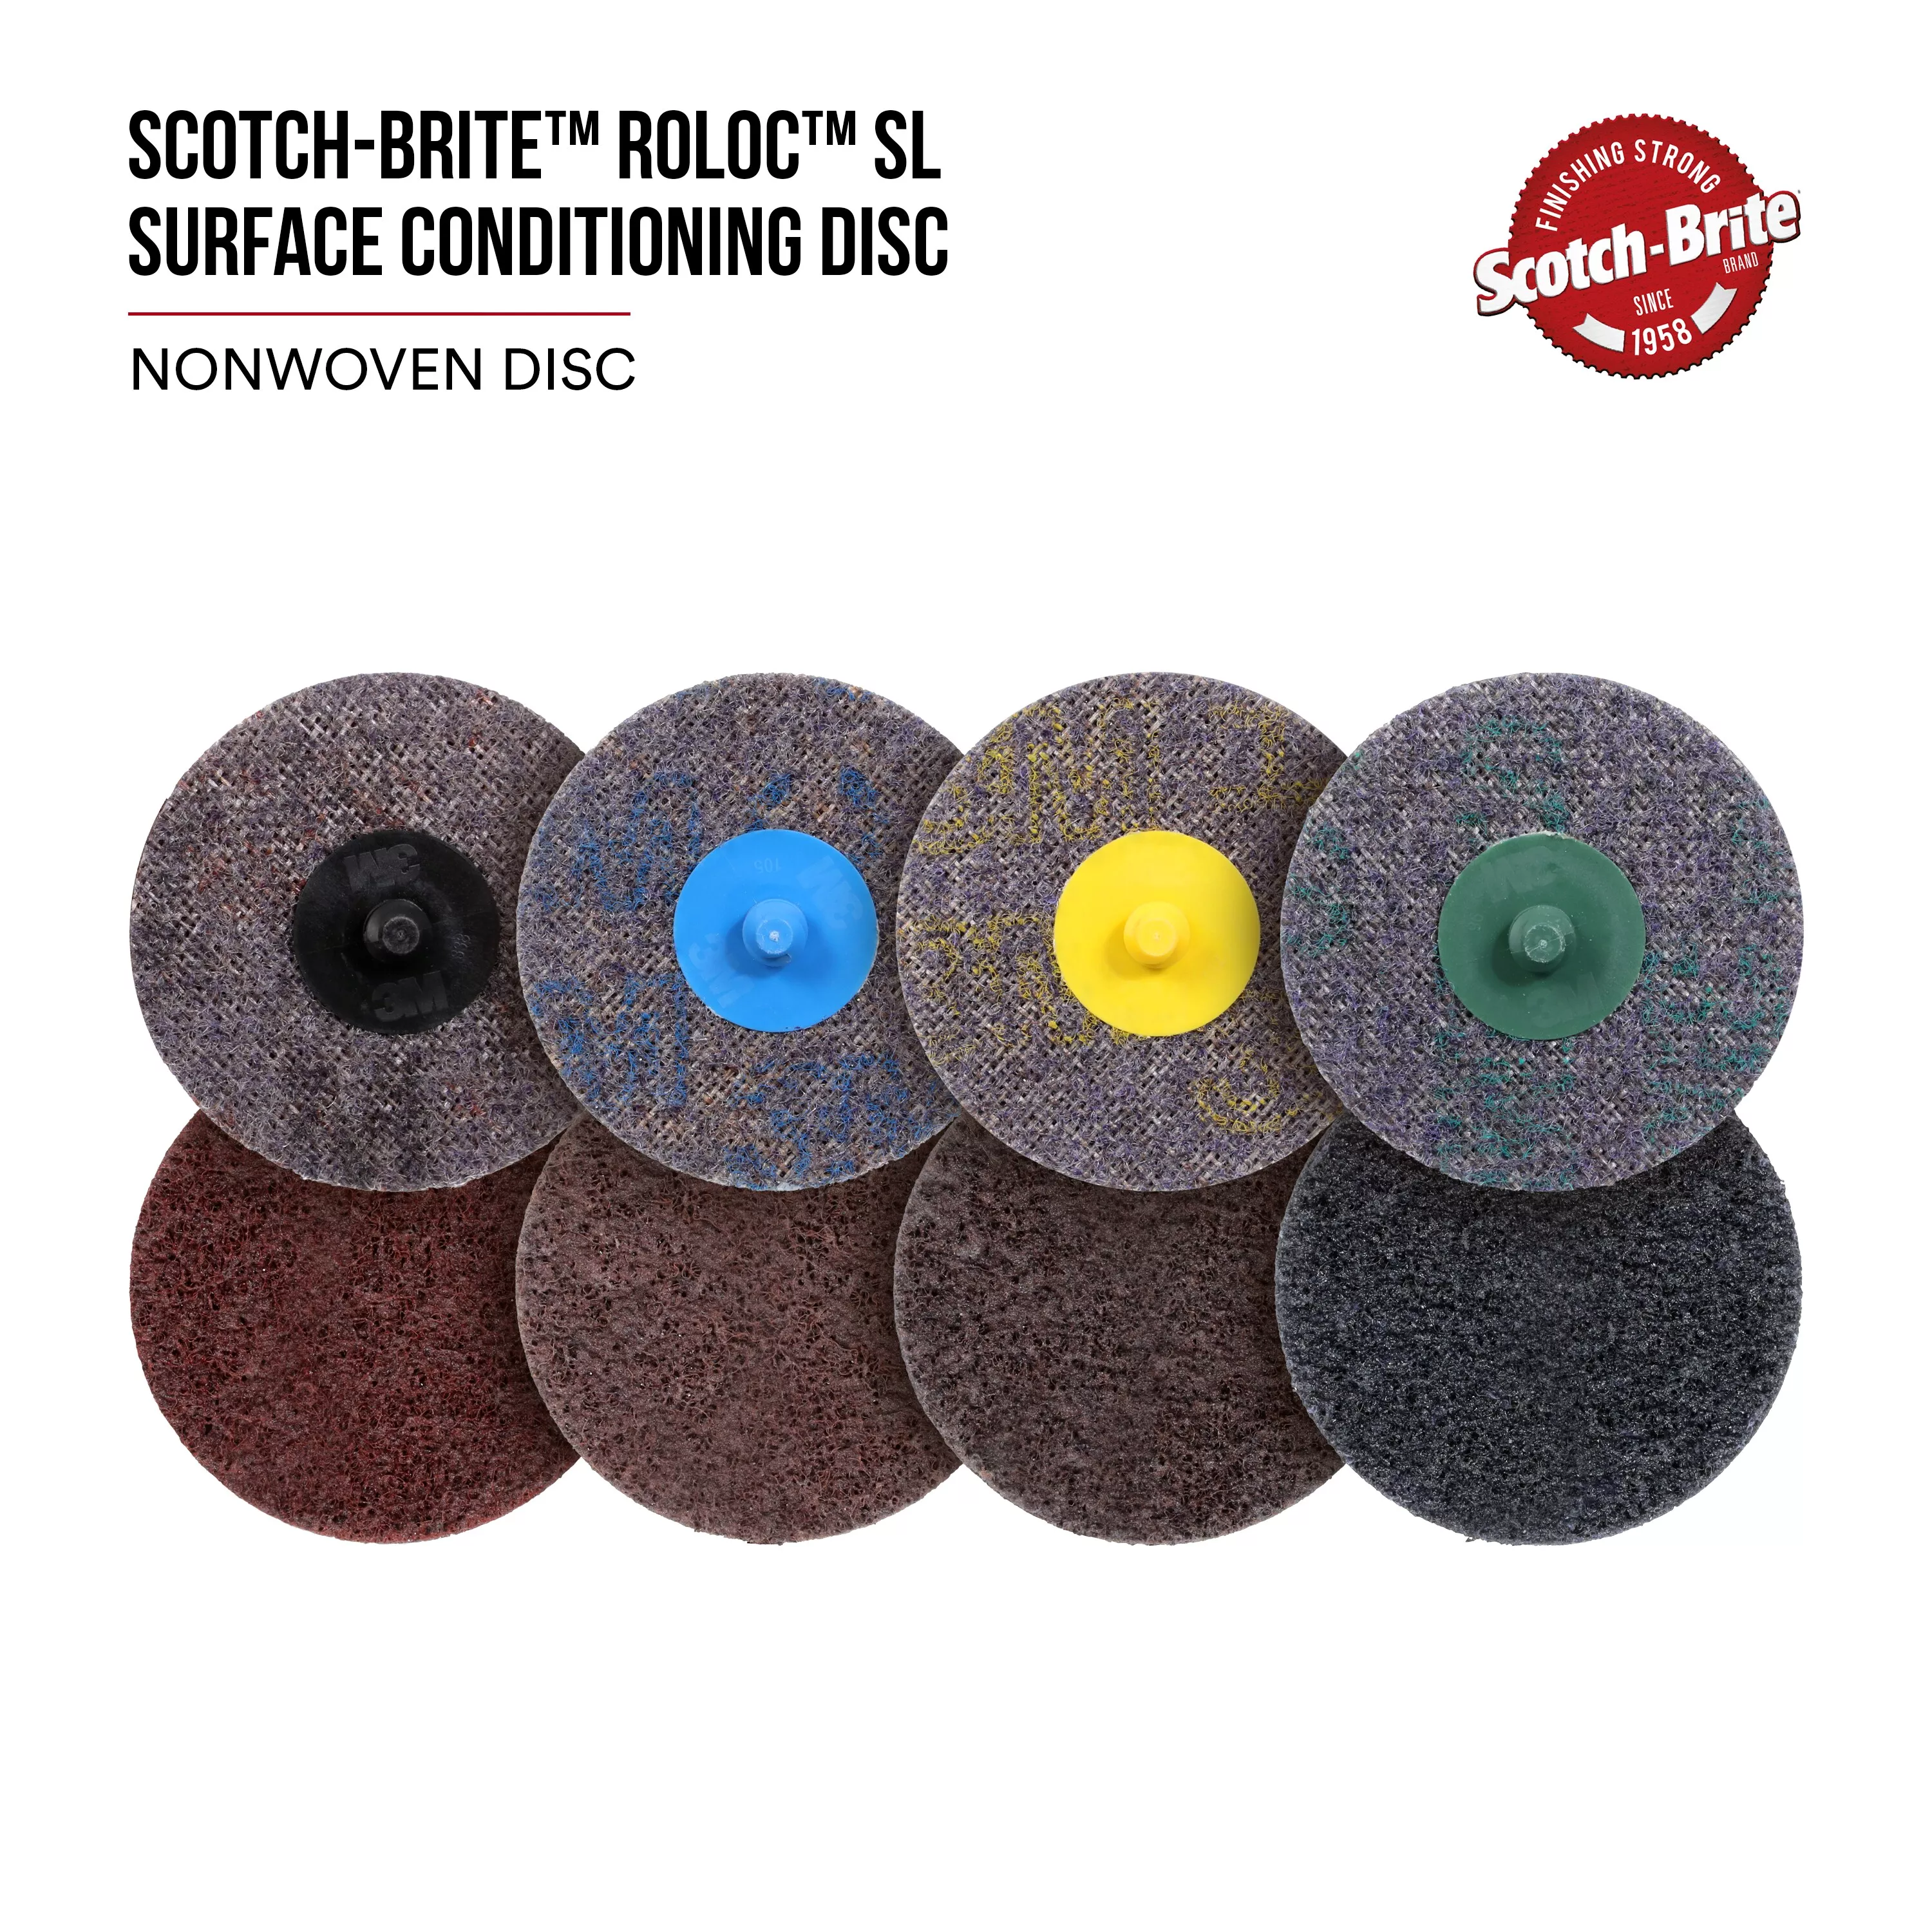 SKU 7000046219 | Scotch-Brite™ Roloc™ SL Surface Conditioning Disc